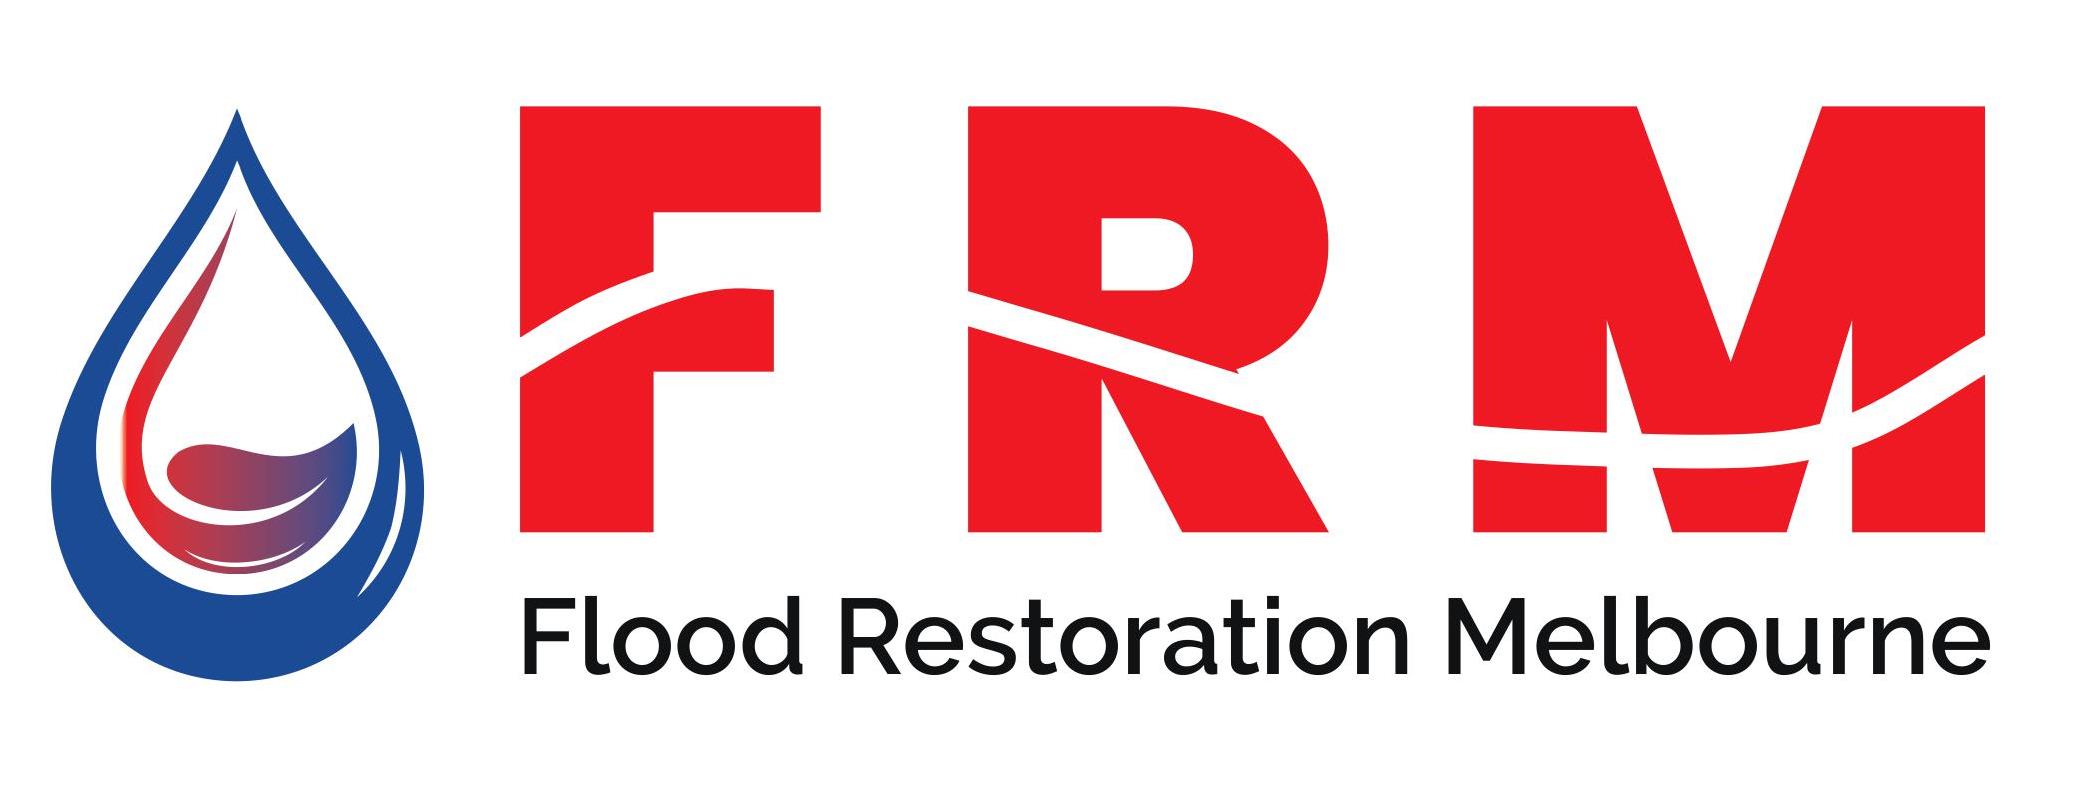 FRM logo 02